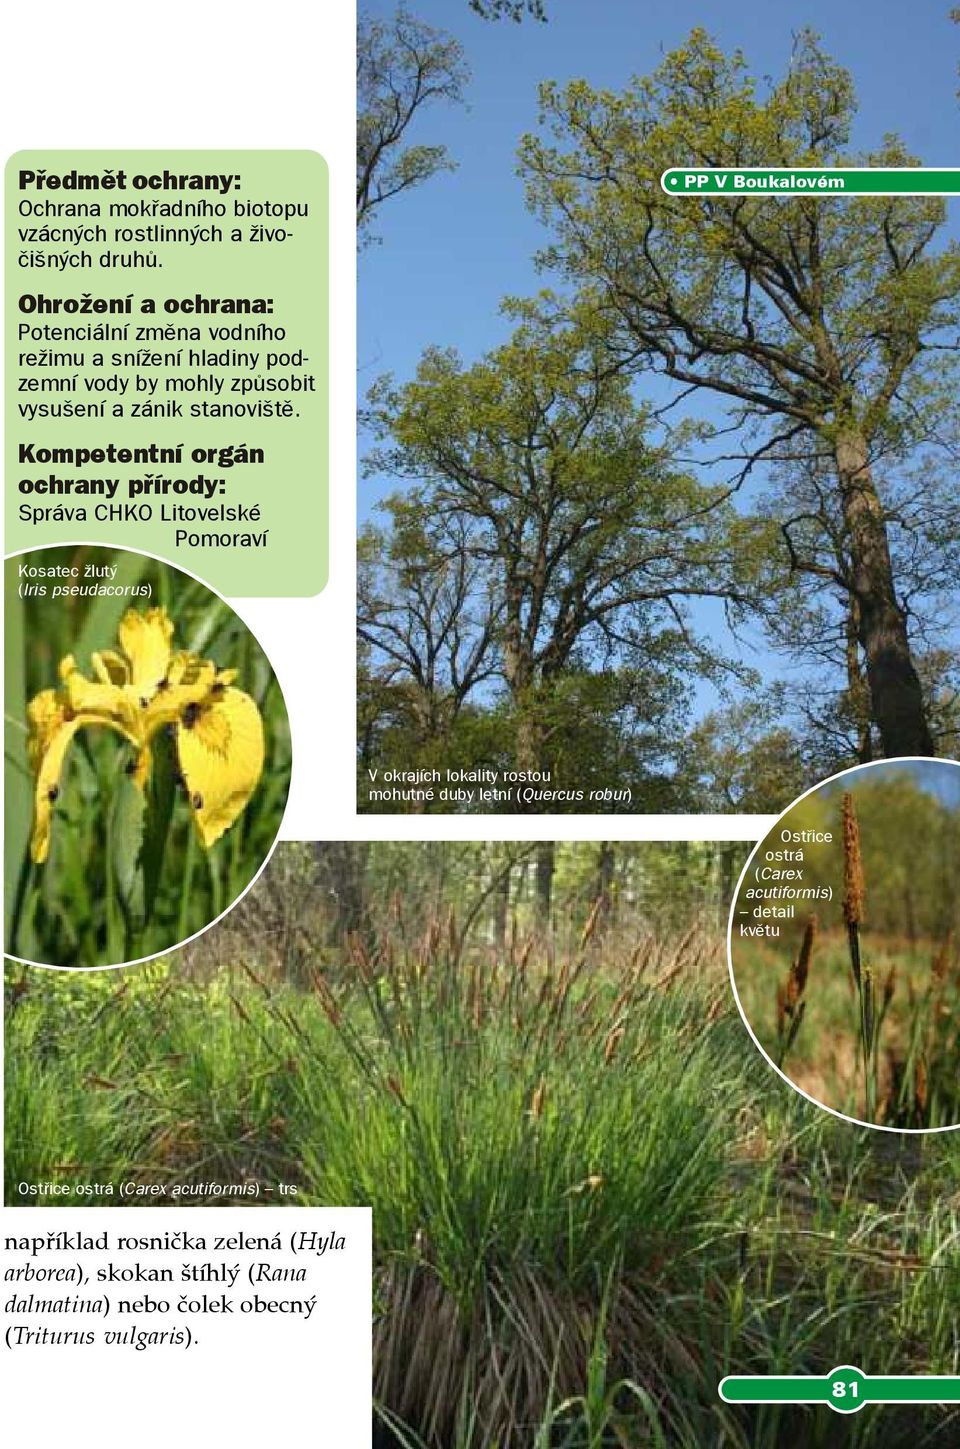 žlutý (Iris pseudacorus) PP V Boukalovém V okrajích lokality rostou mohutné duby letní (Quercus robur) Ostřice ostrá (Carex acutiformis) detail